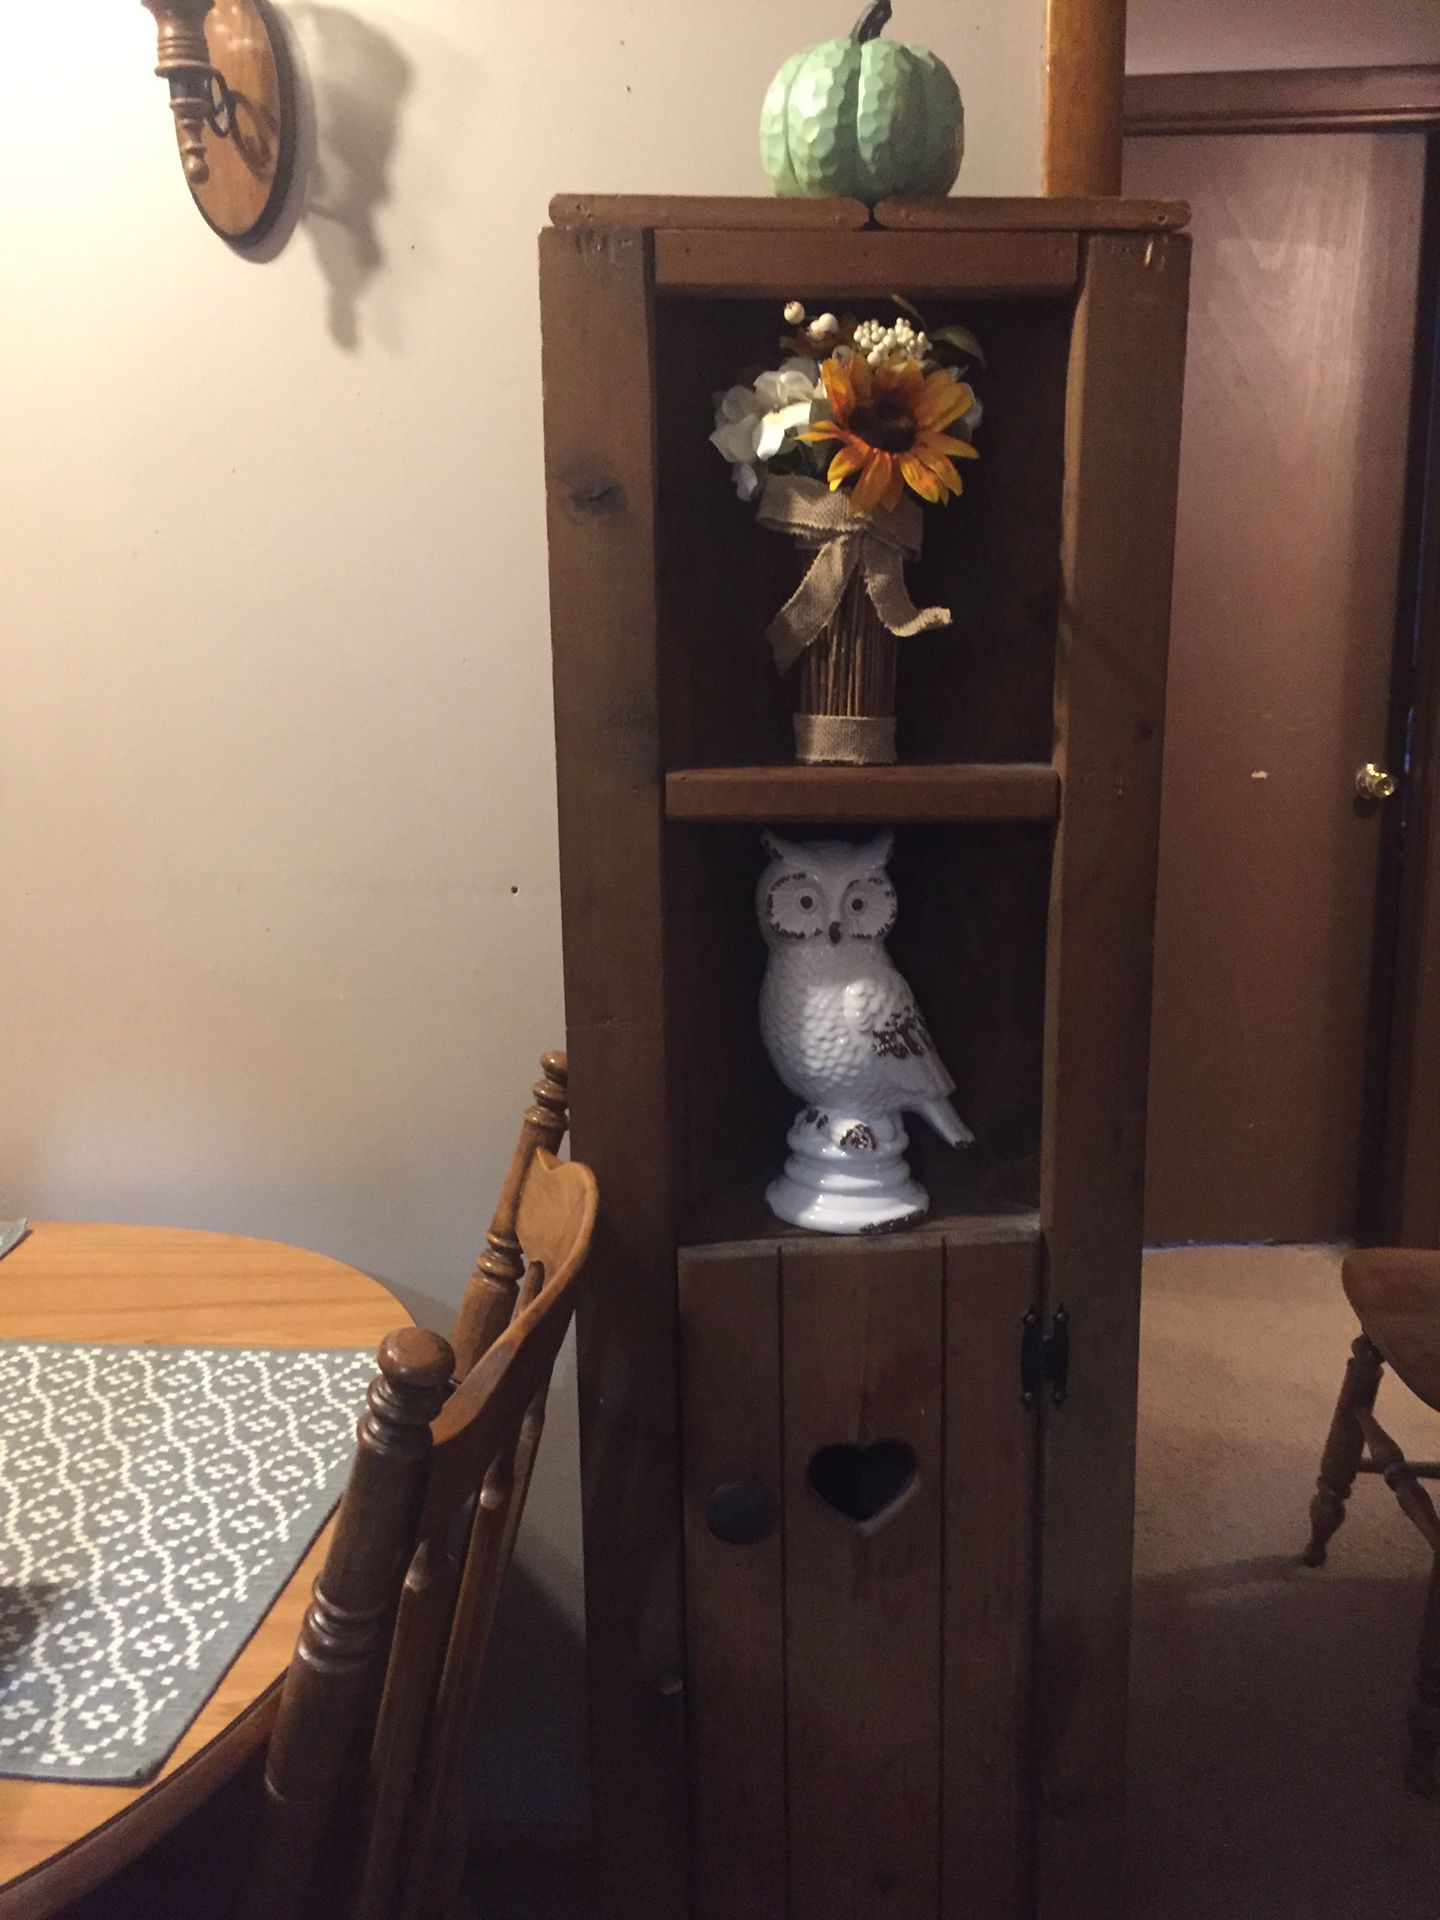 Decorative little shelf